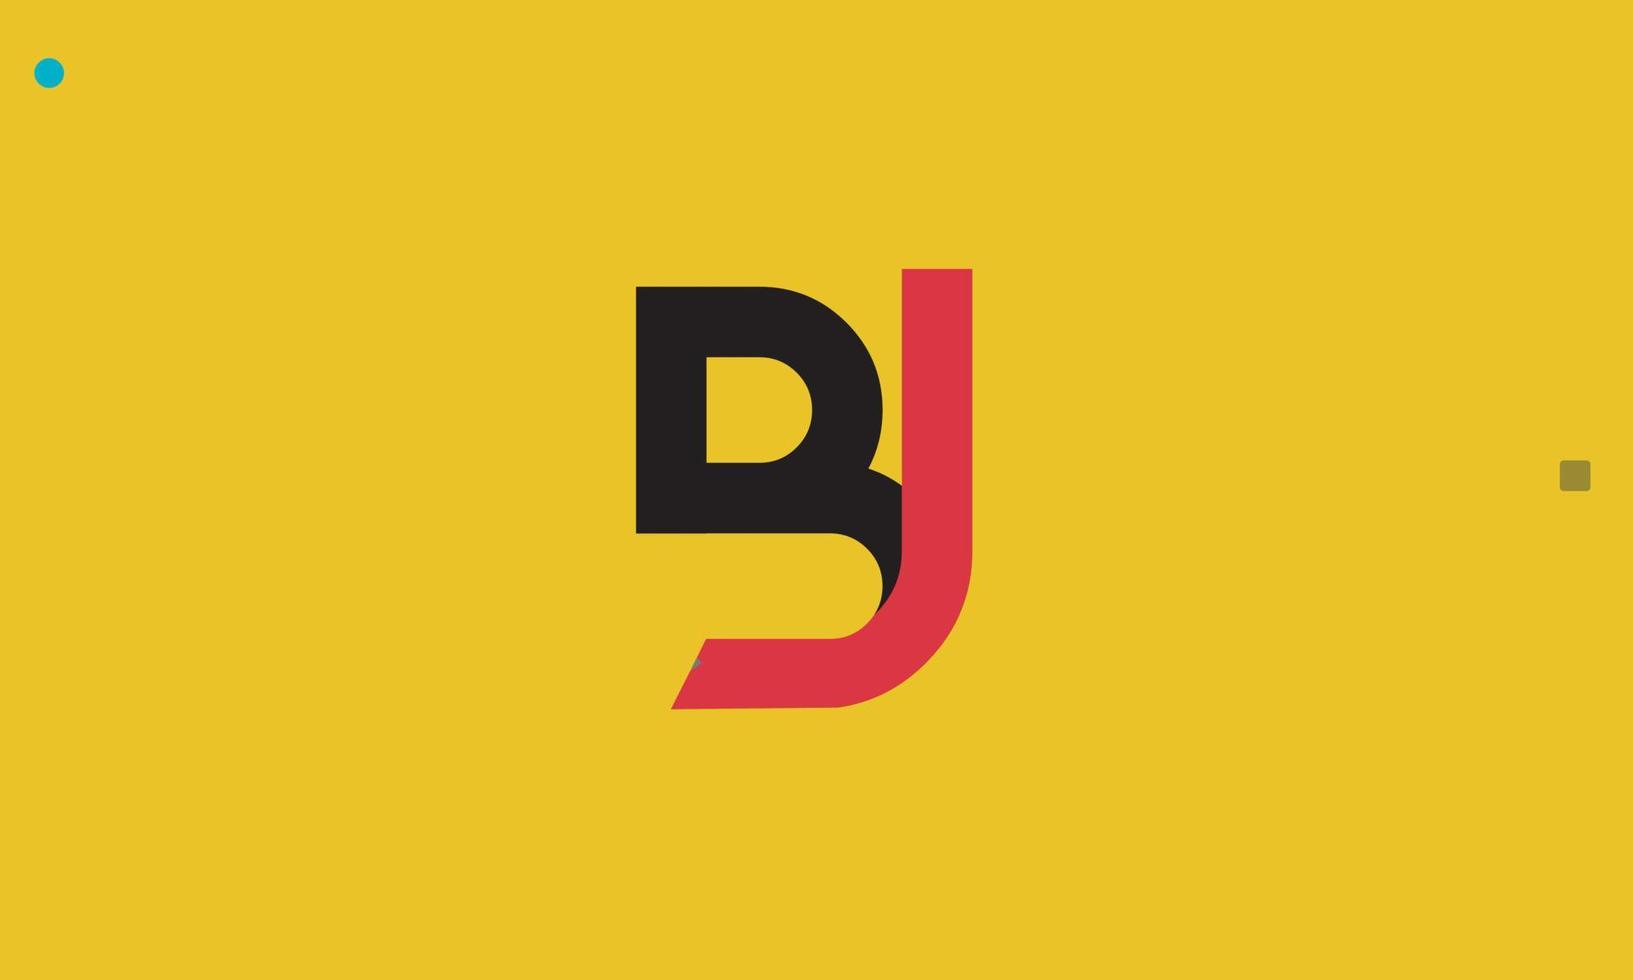 letras do alfabeto iniciais monograma logotipo bj, jb, b e j vetor